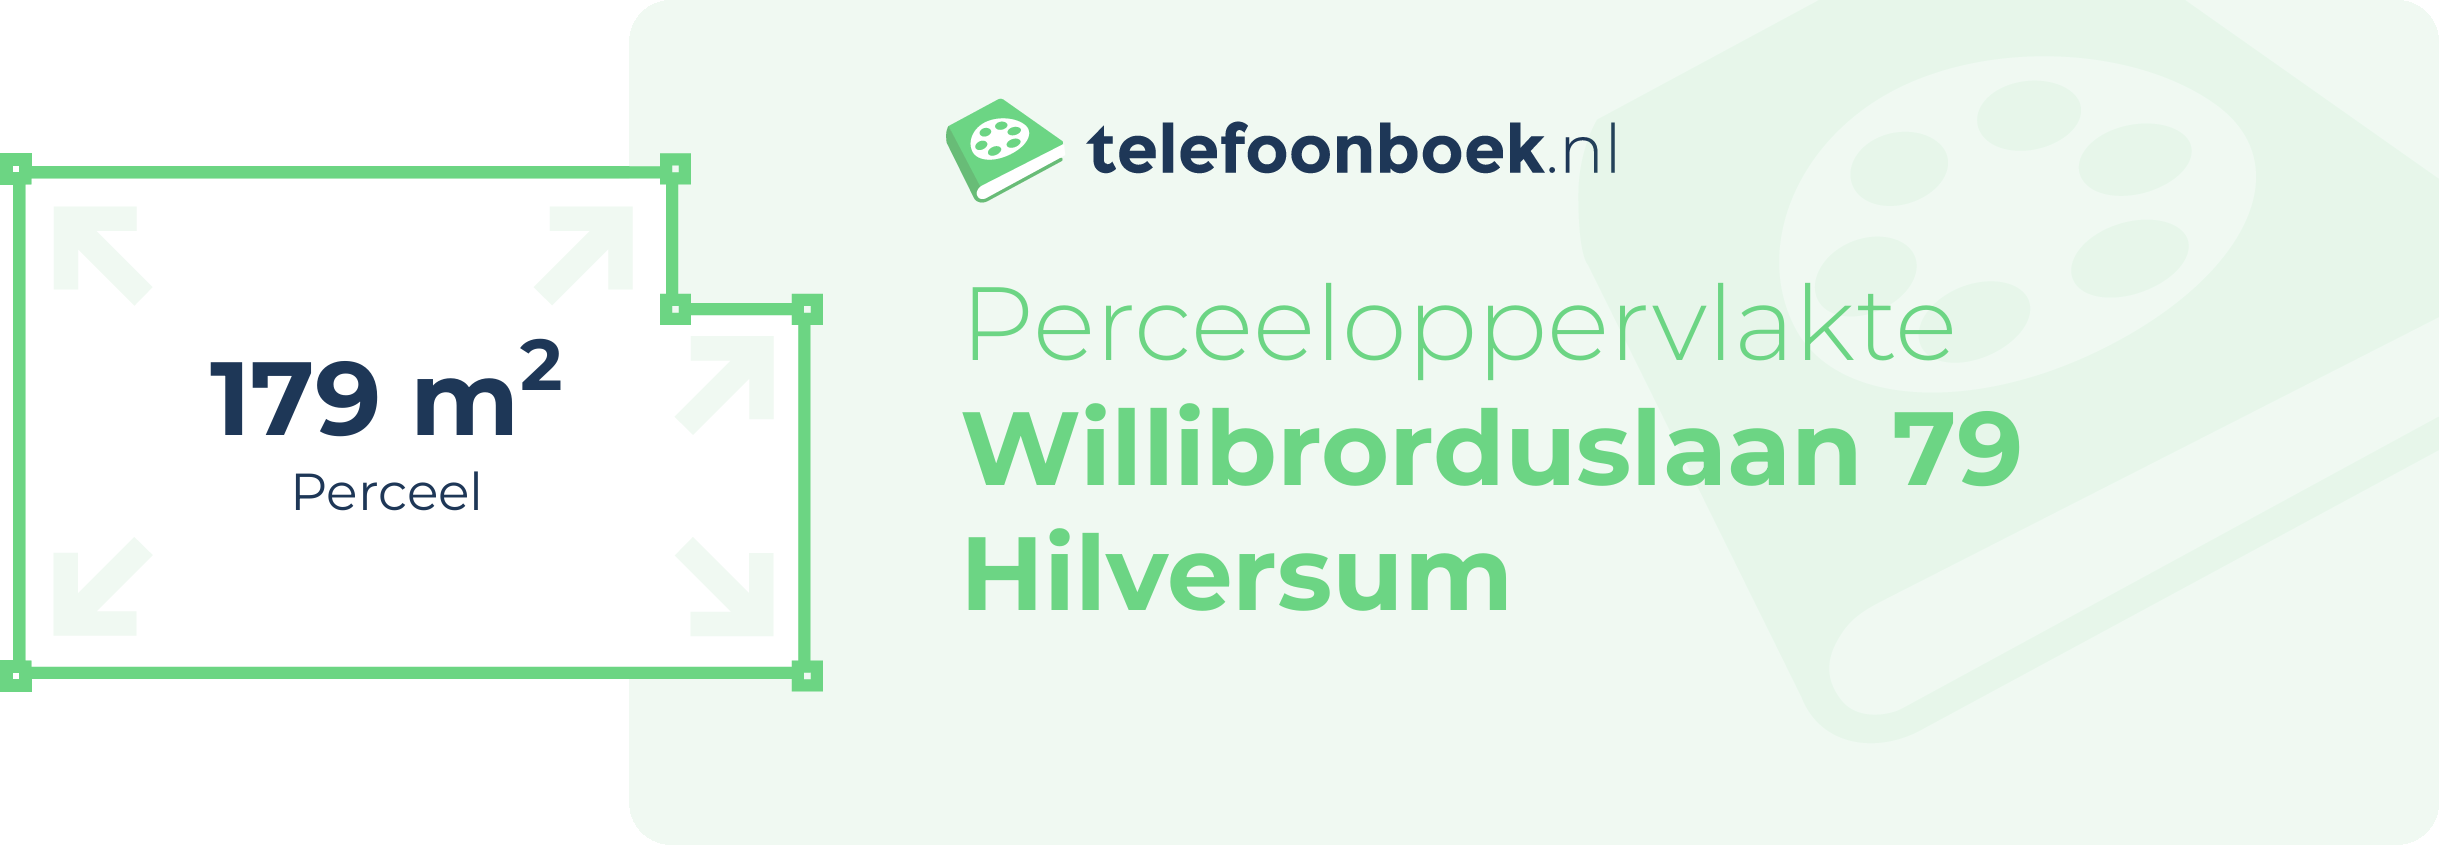 Perceeloppervlakte Willibrorduslaan 79 Hilversum